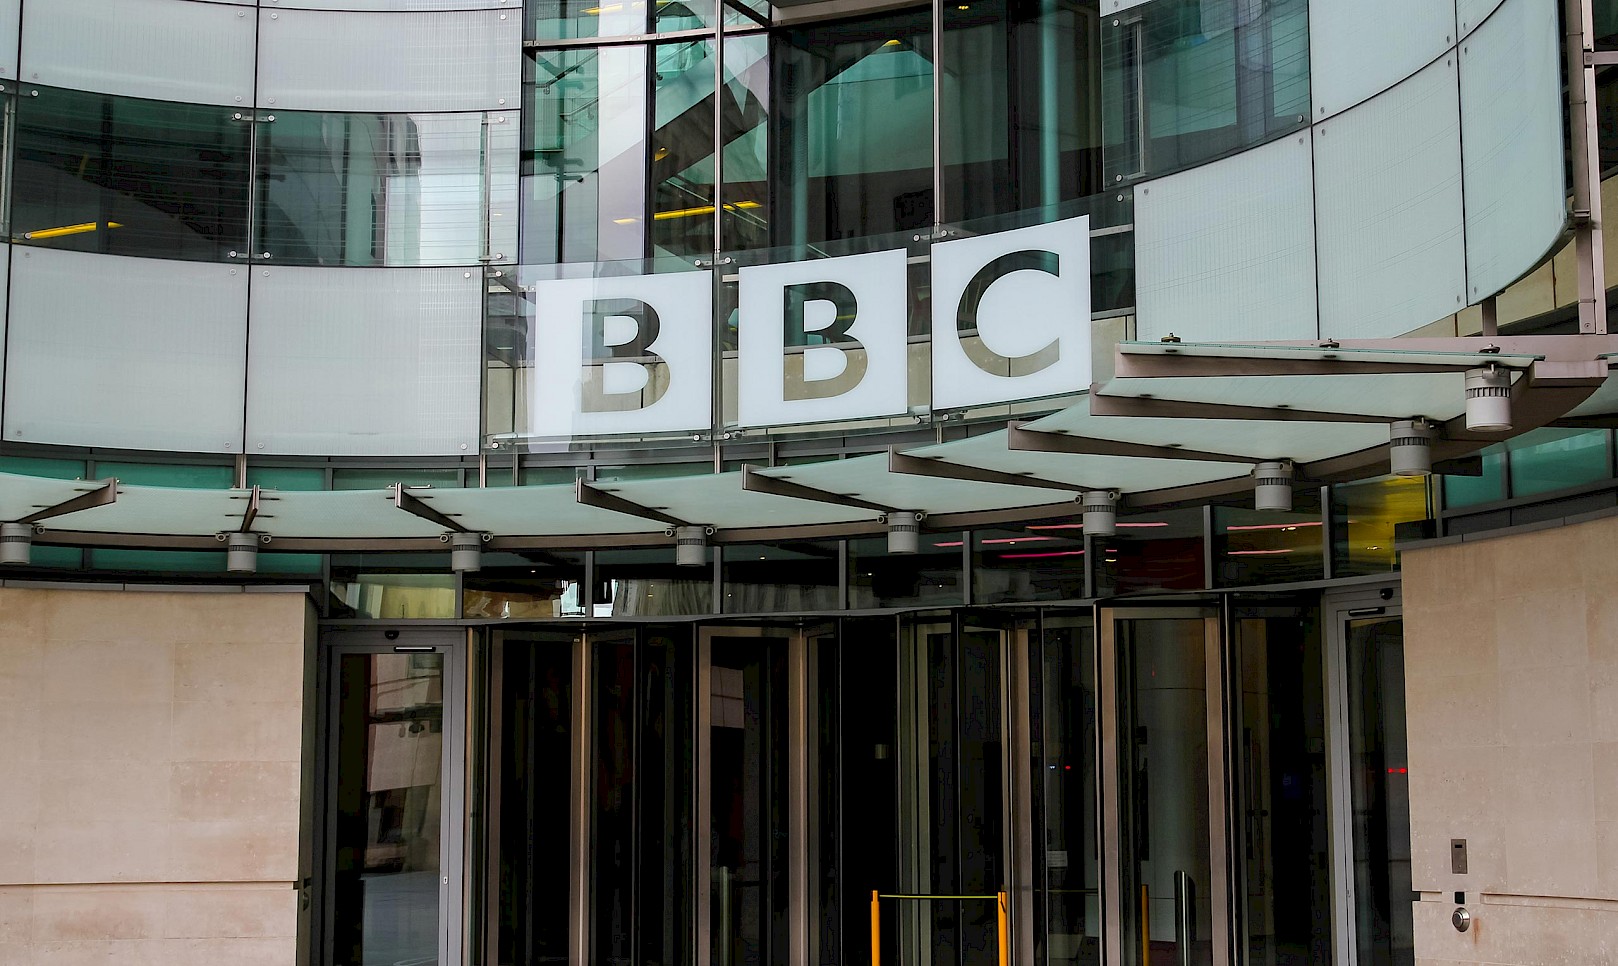 Breaking news… BBC investigates toughened flat glass